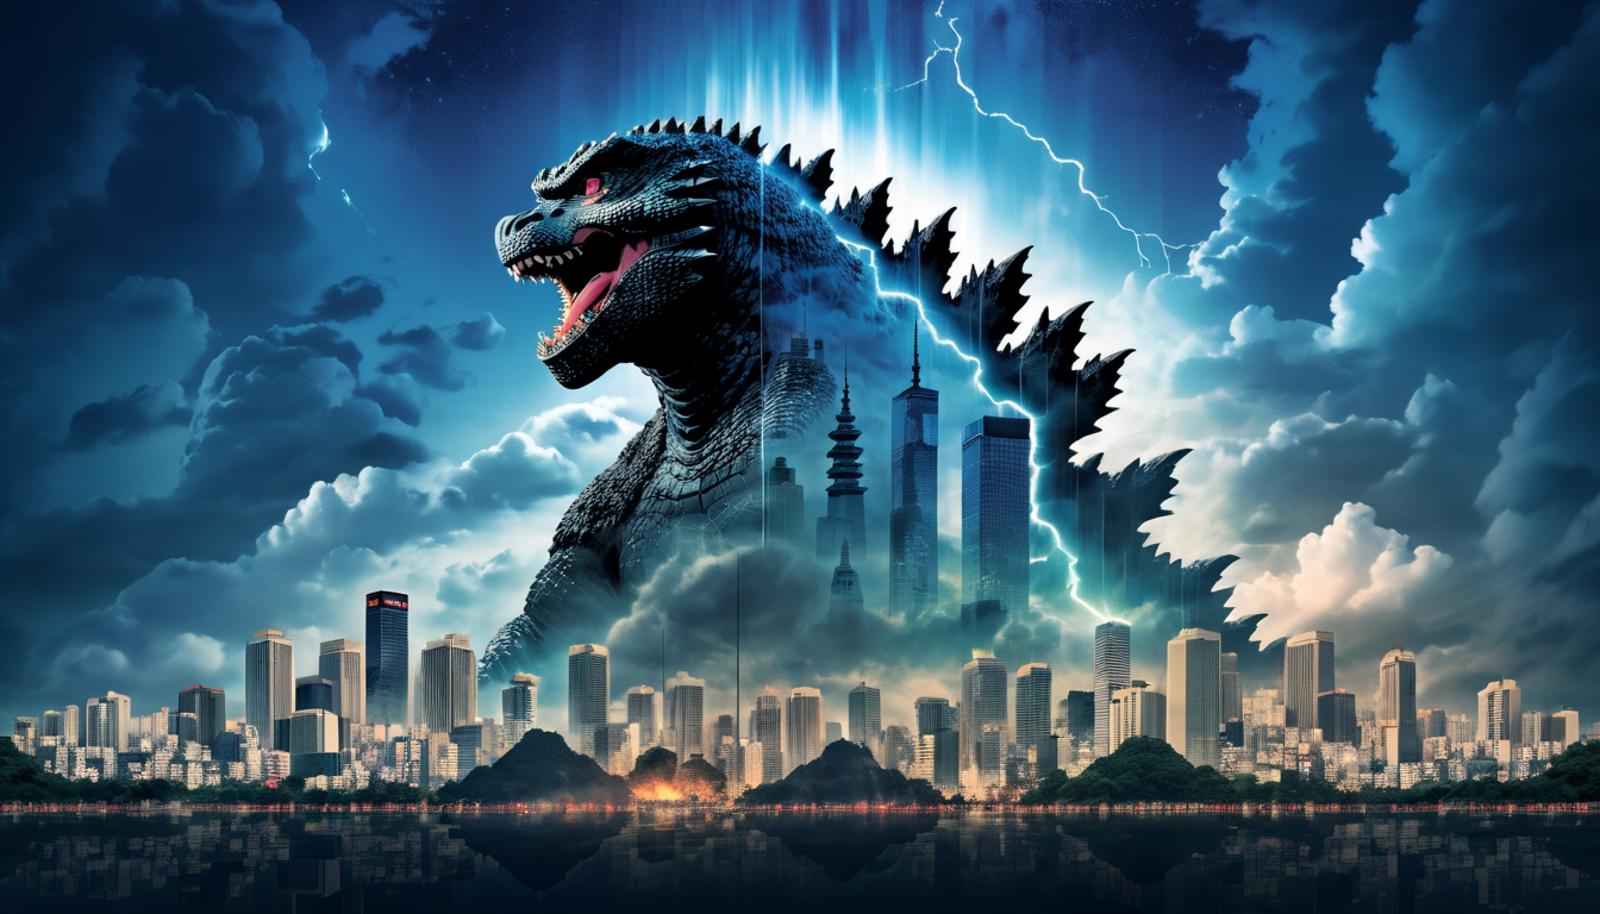 A giant Godzilla monster looms over a city skyline.